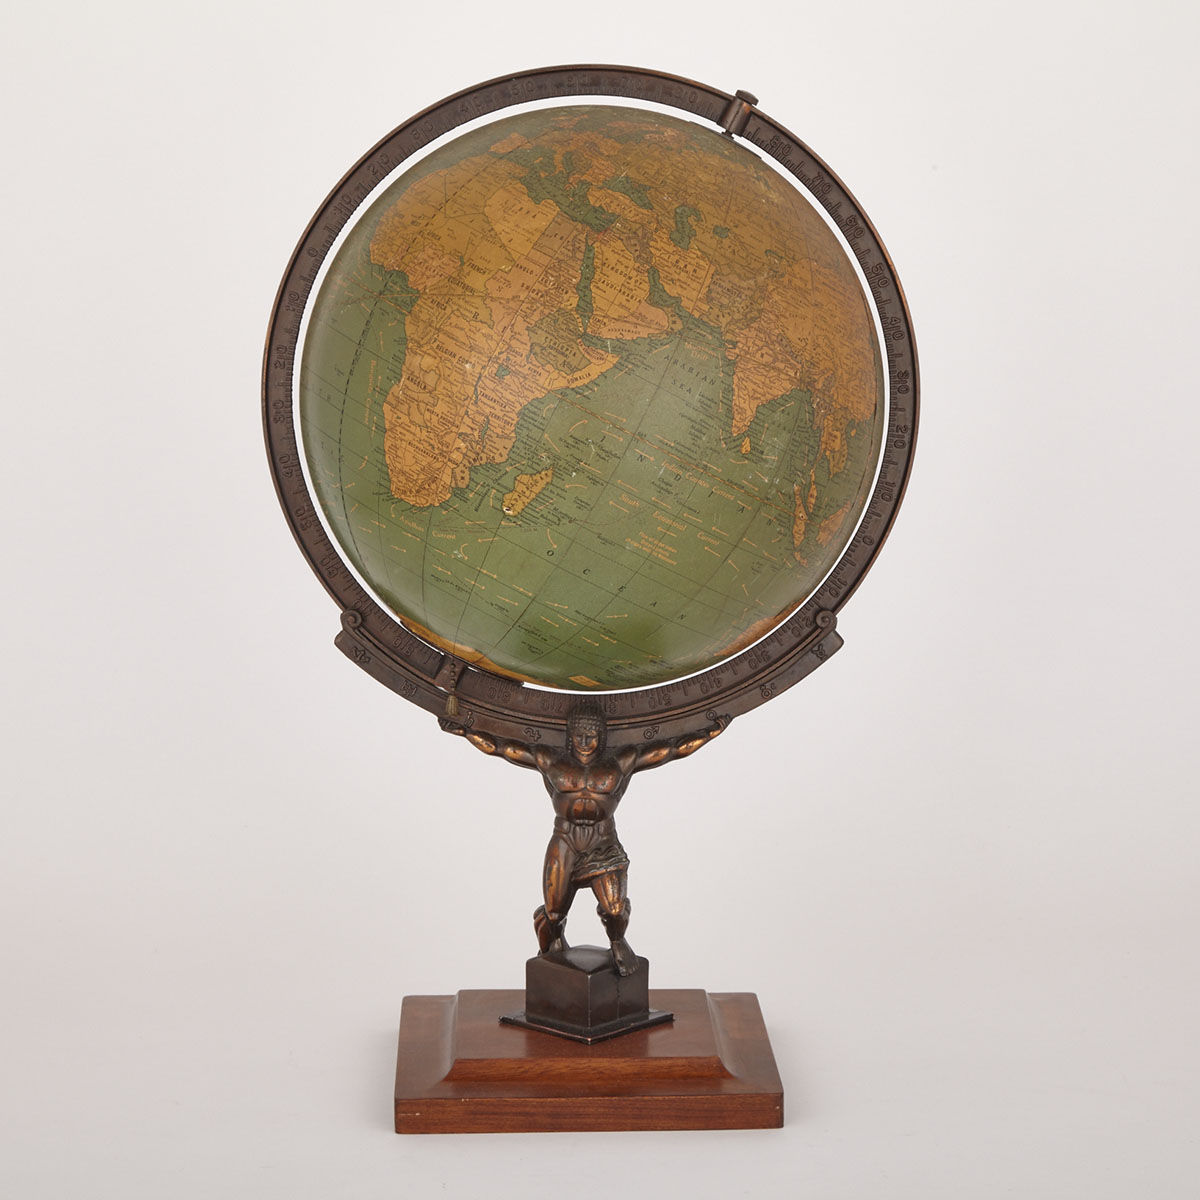 Cram’s Unrivaled Illuminated Glass 12 inch Terrestrial Globe, c.1949